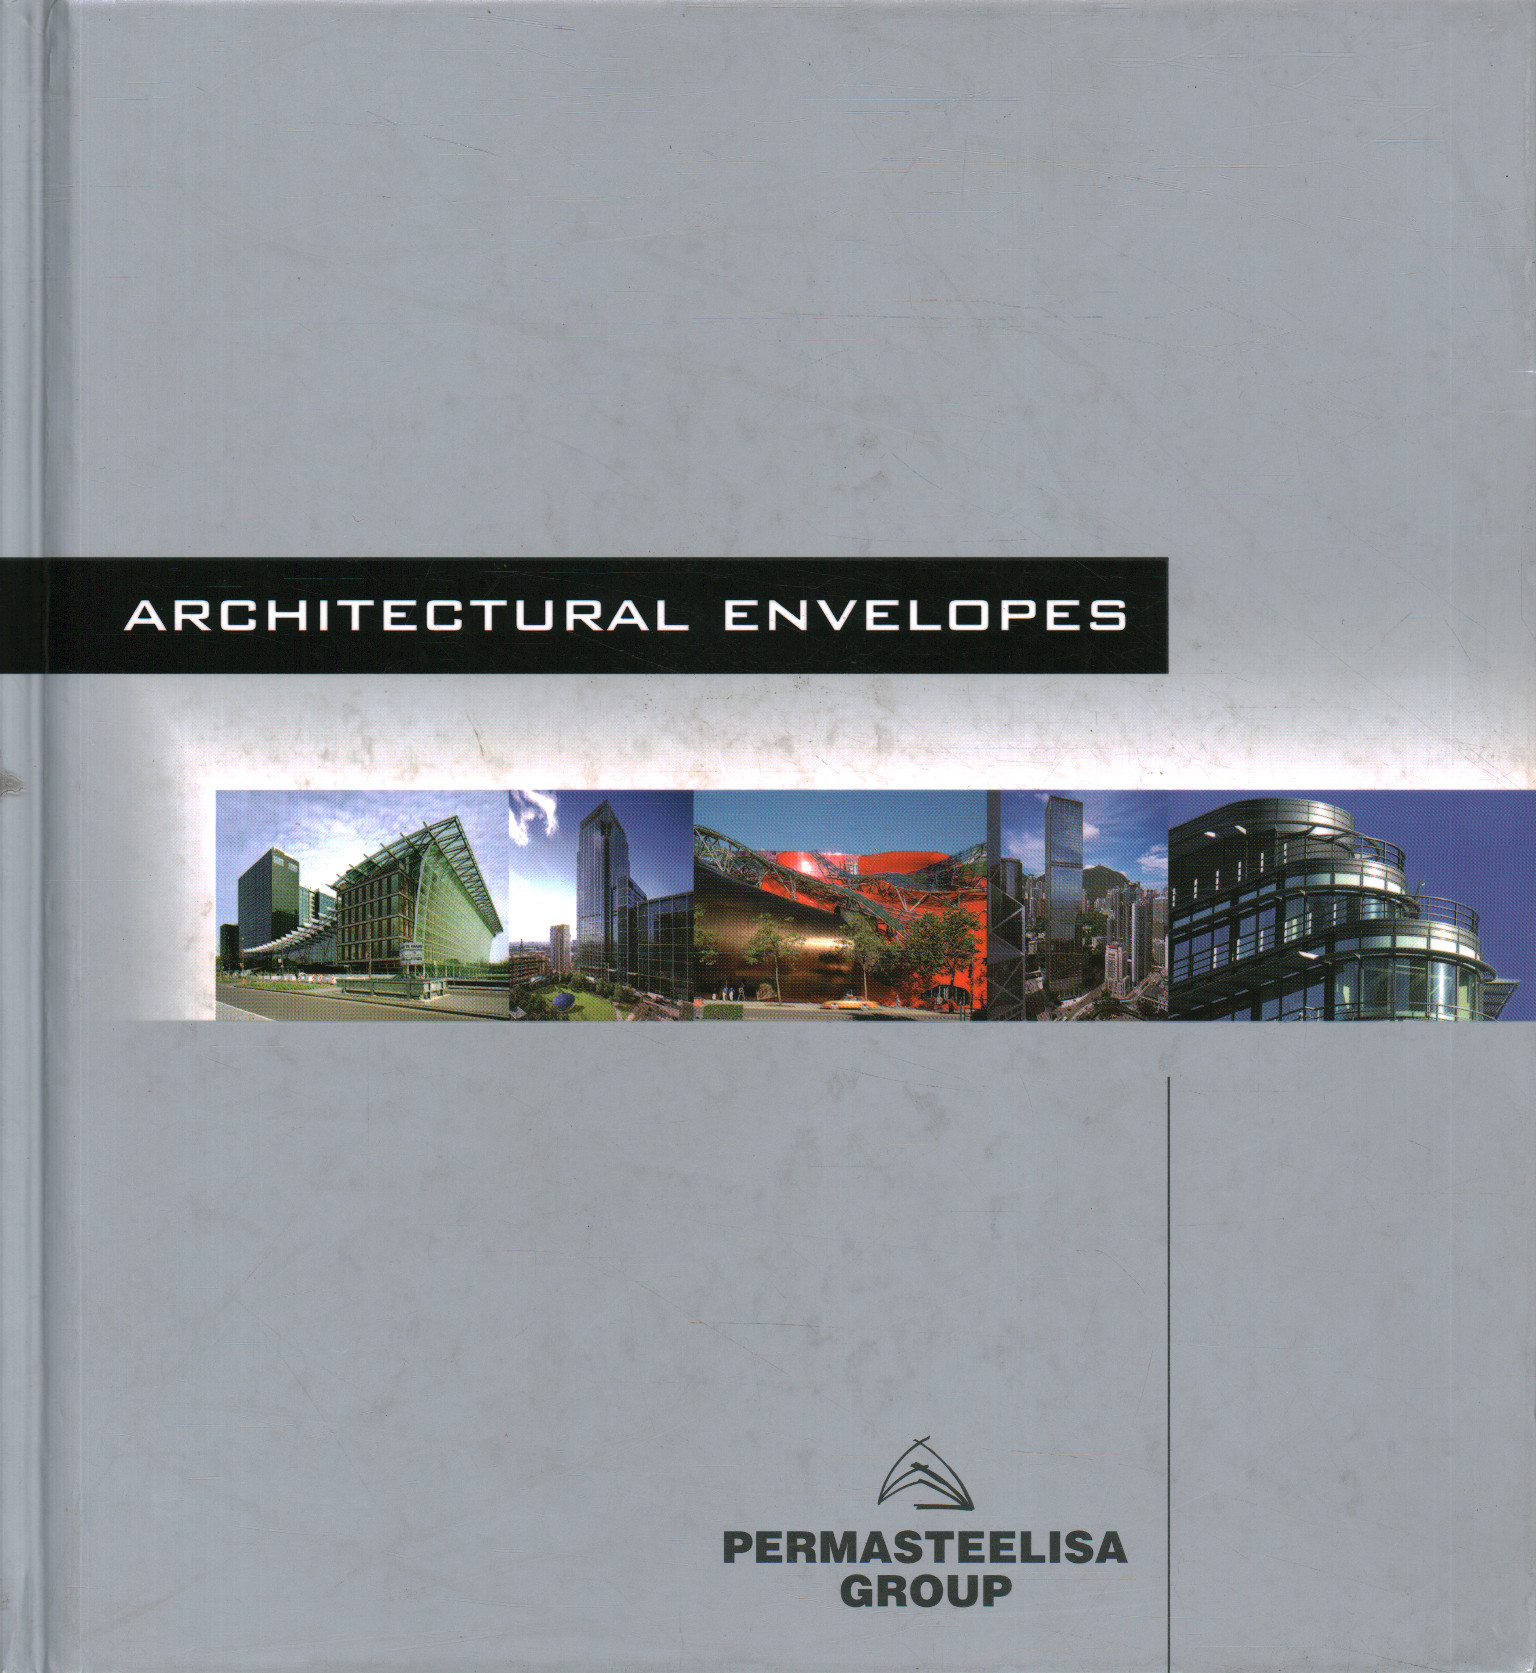 Architectural envelopes